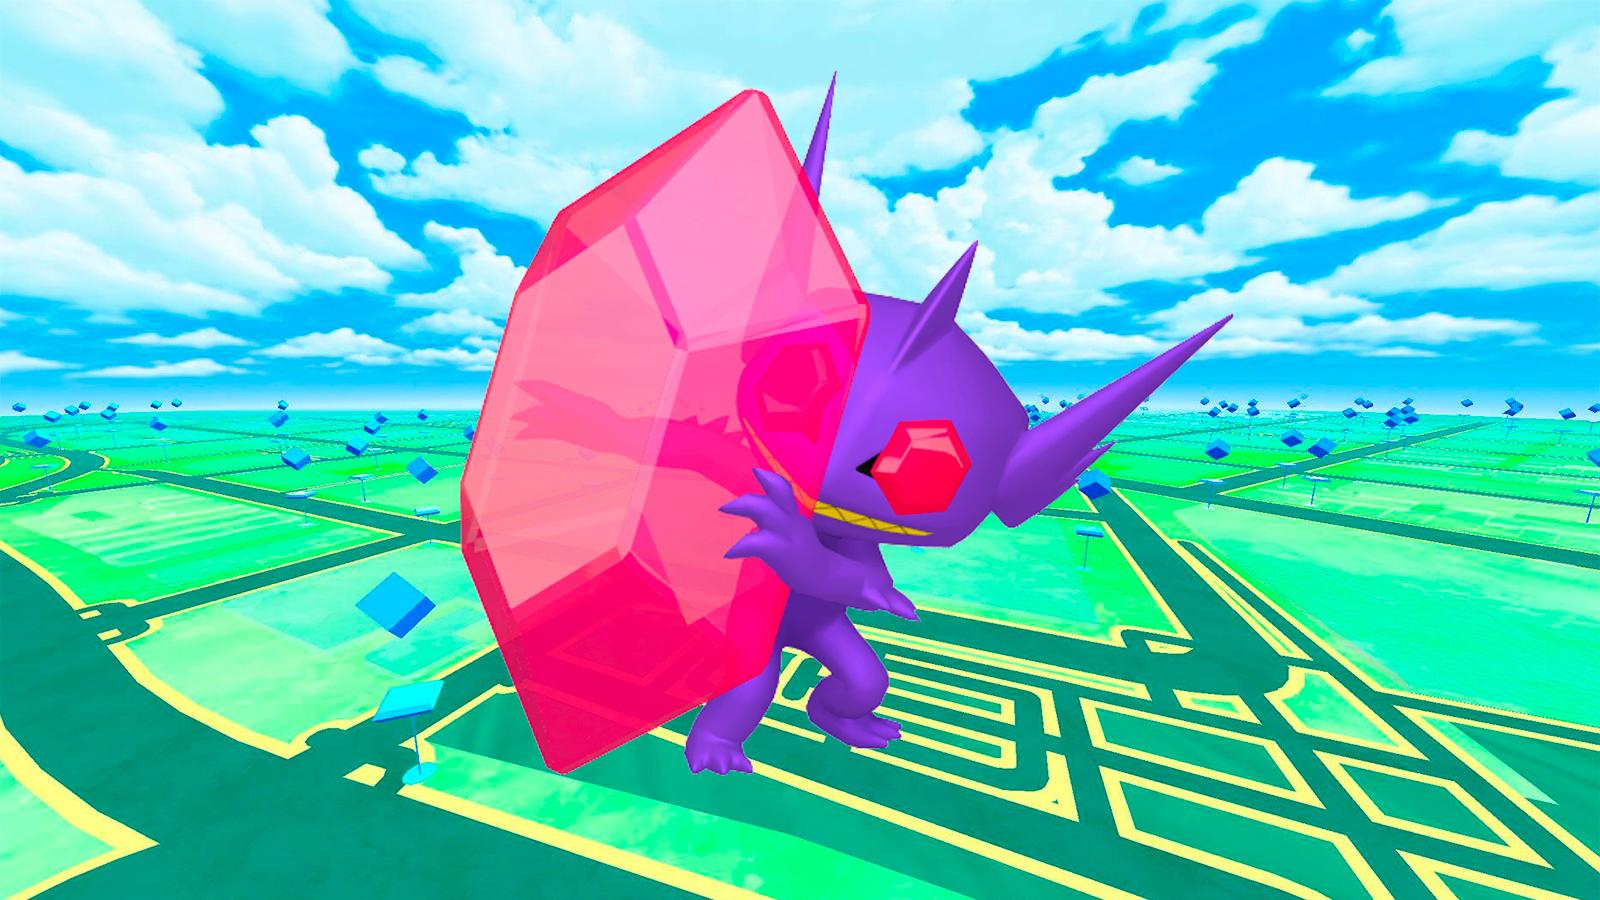 Pokémon Go Mega Sableye counters, weakness and raid battle tips